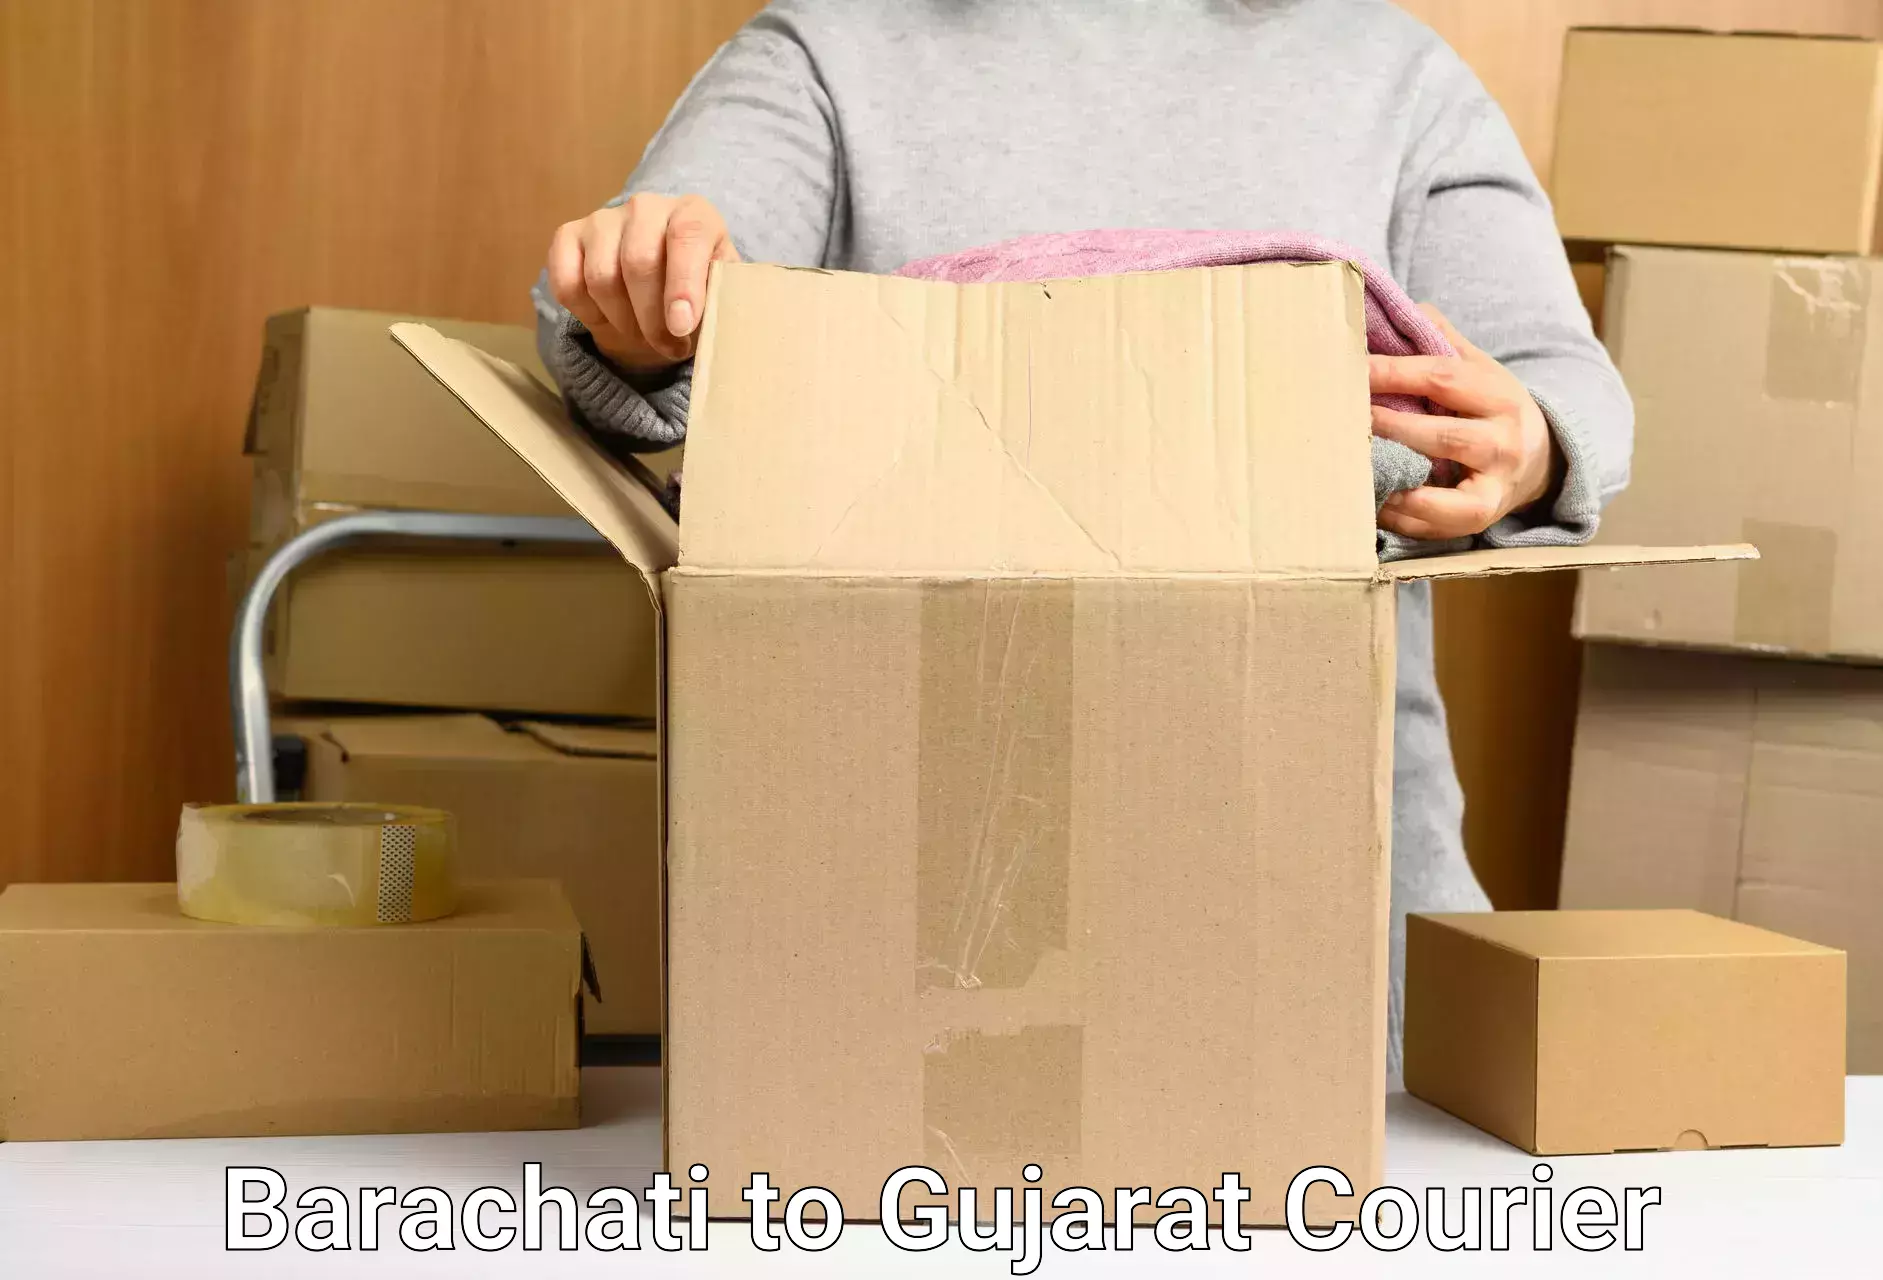 Cash on delivery service Barachati to Gandhinagar